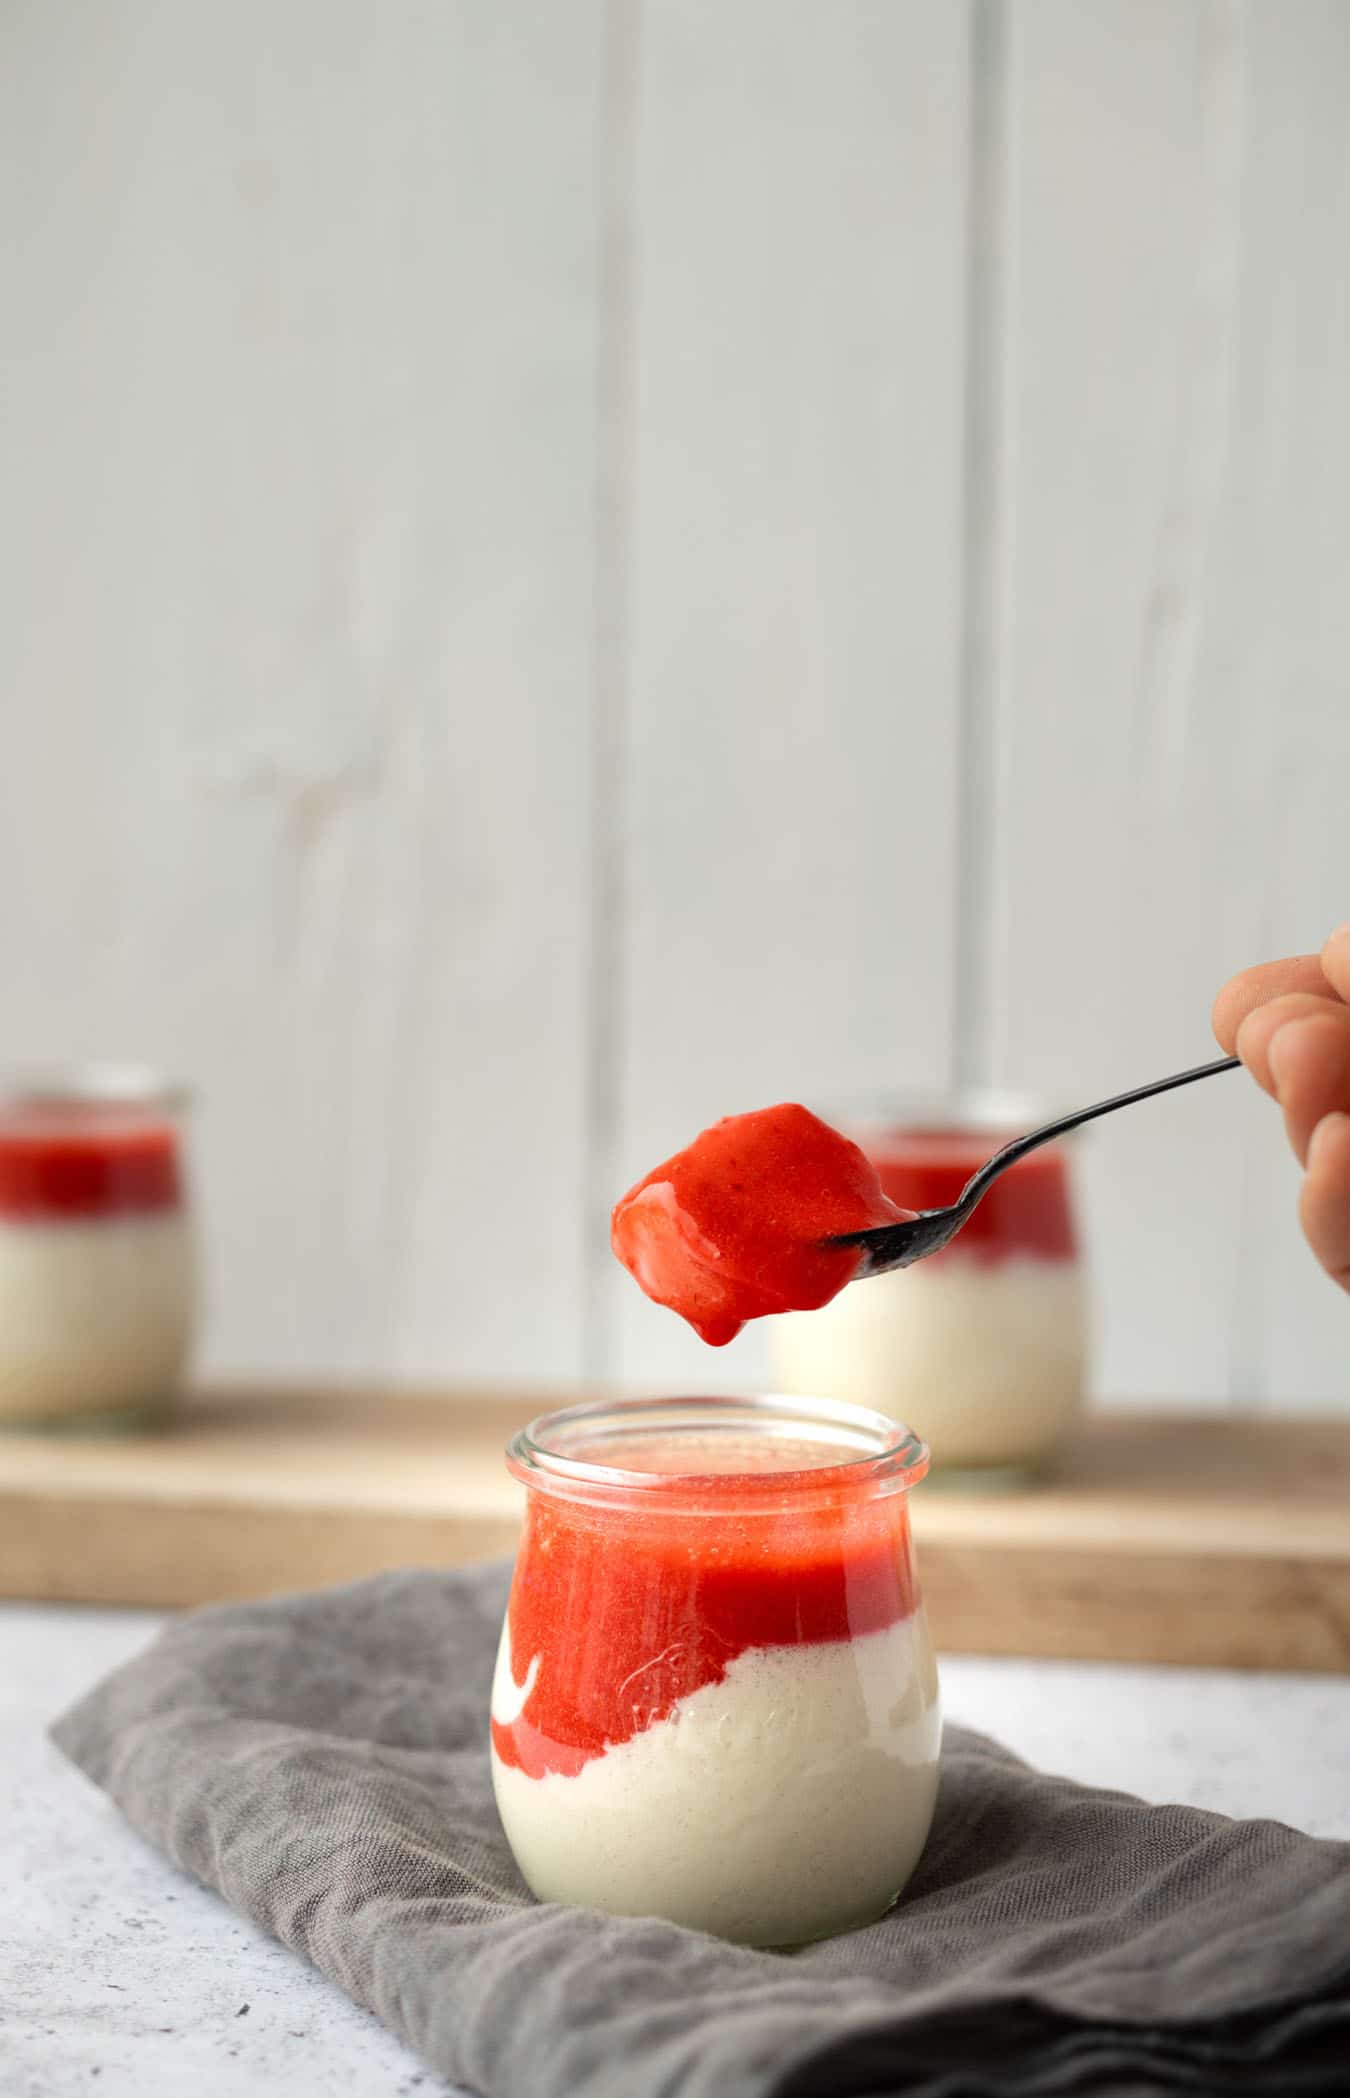 vegan panna cotta with strawberry sauce (5 ingredients) recipe